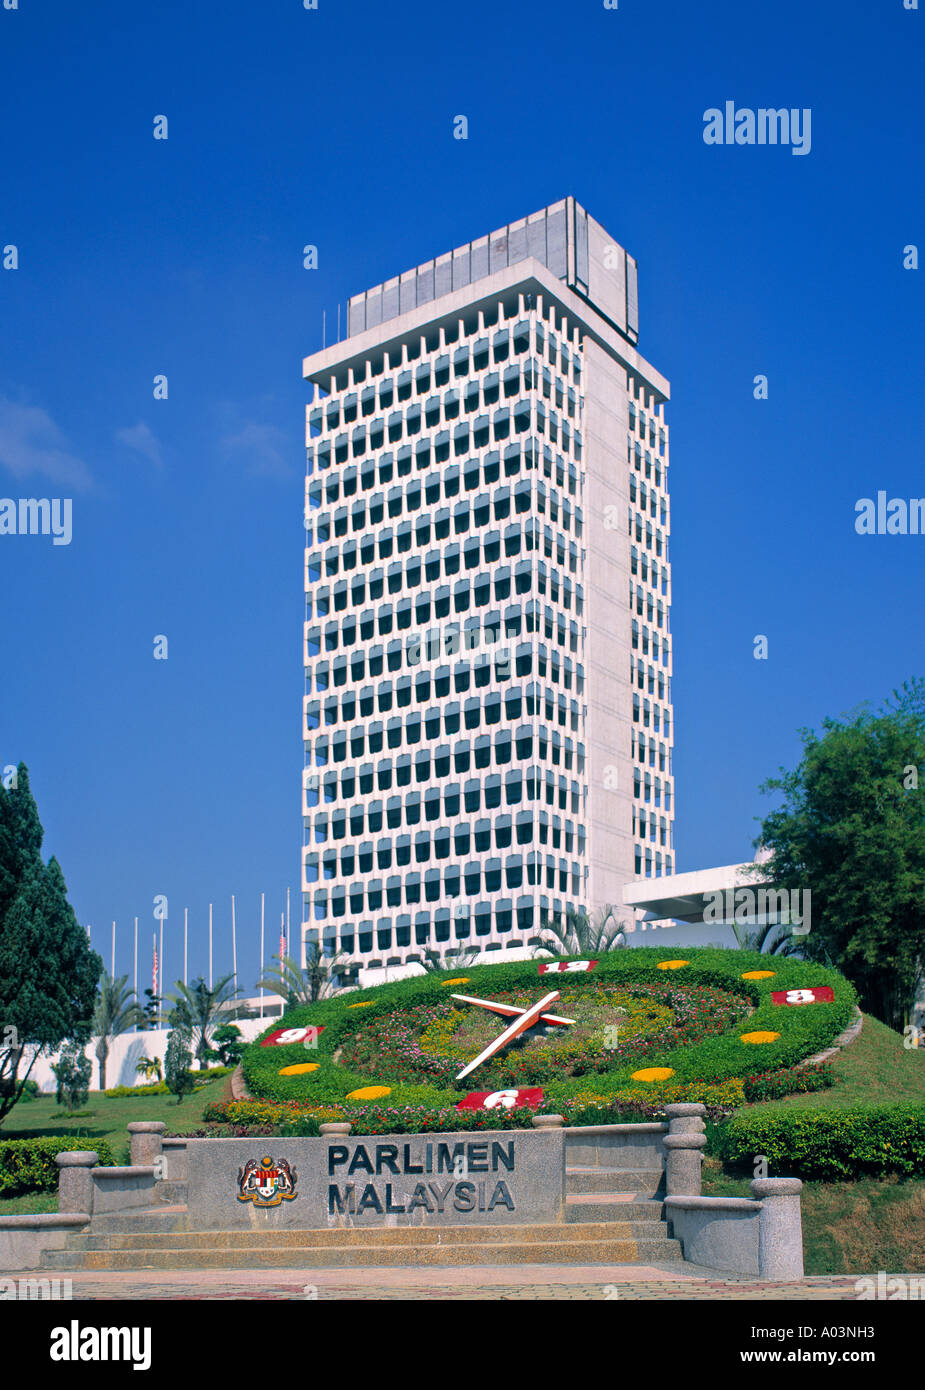 Parliament Malaysia Images Stock Photos Vectors Shutterstock